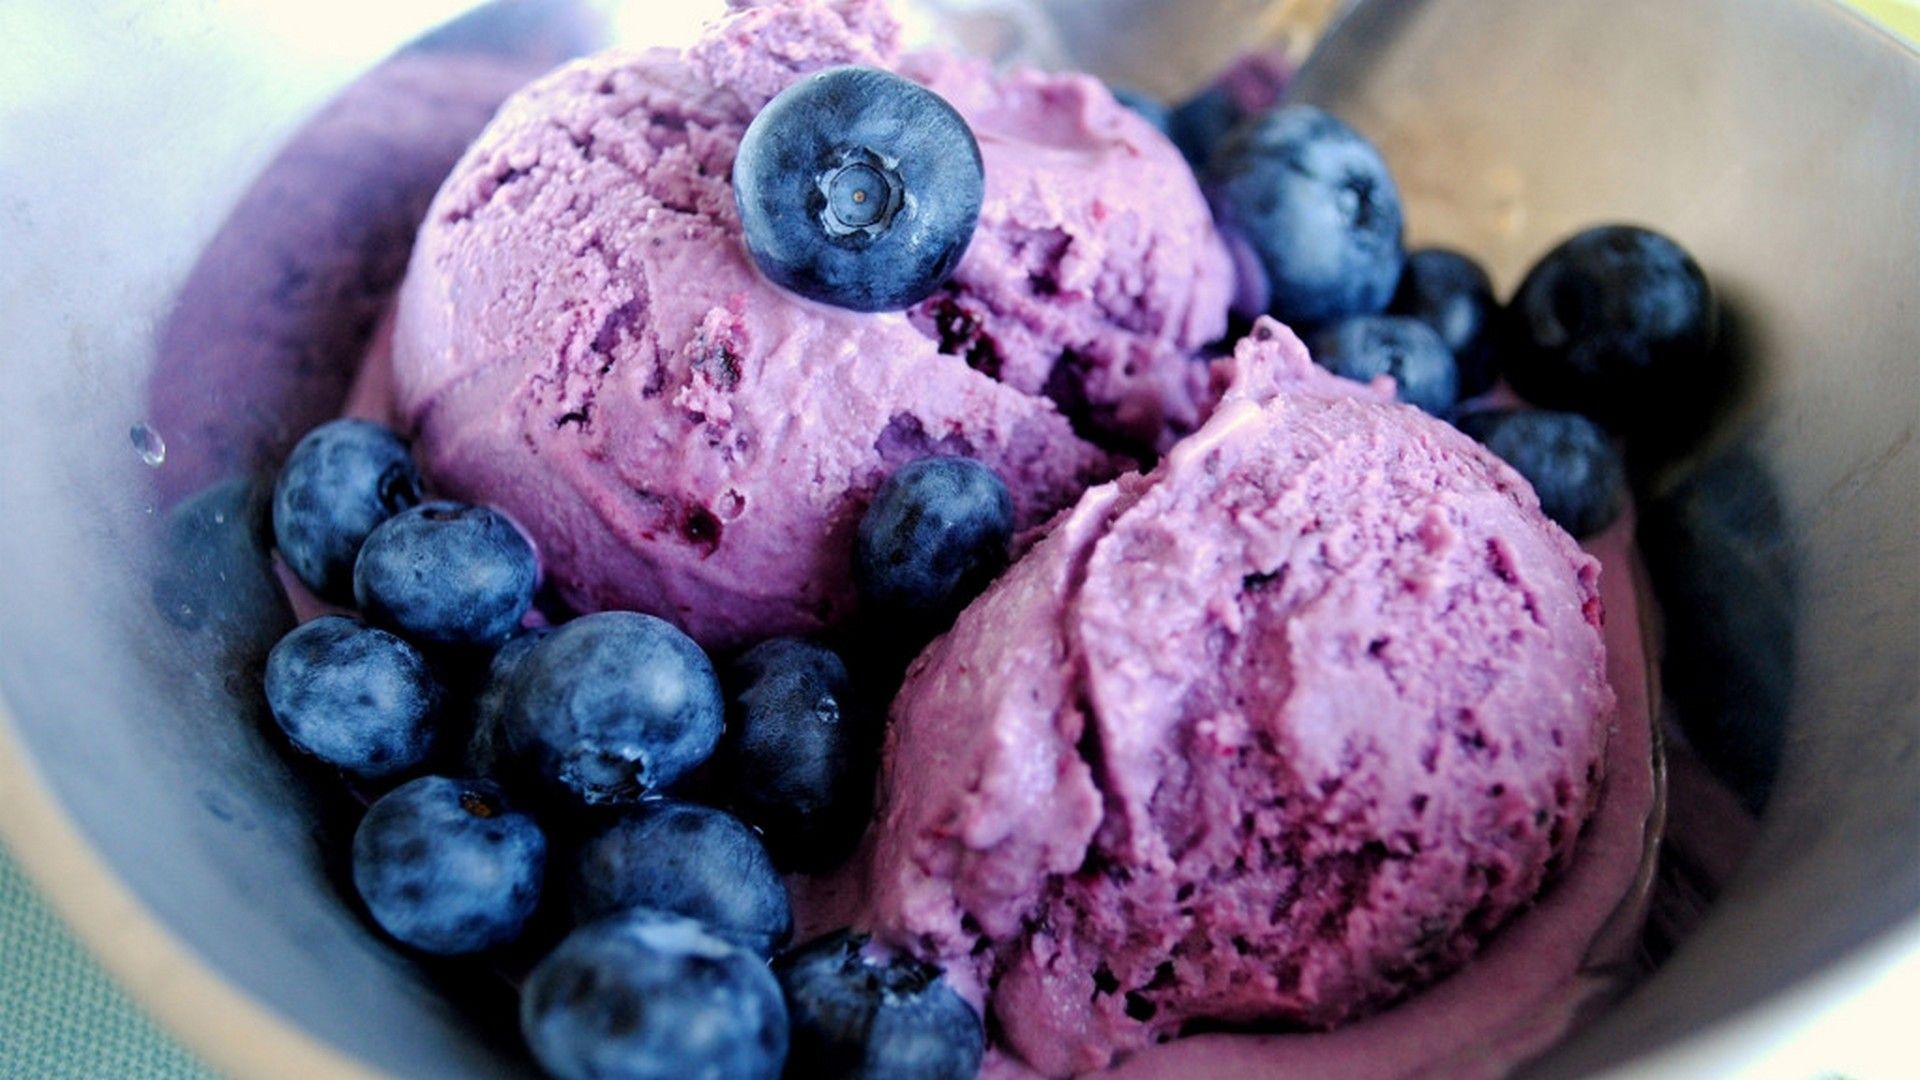 HD wallpaper ice cream, Blueberry ice cream, Vibrant colors, Tempting treat, 1920x1080 Full HD Desktop